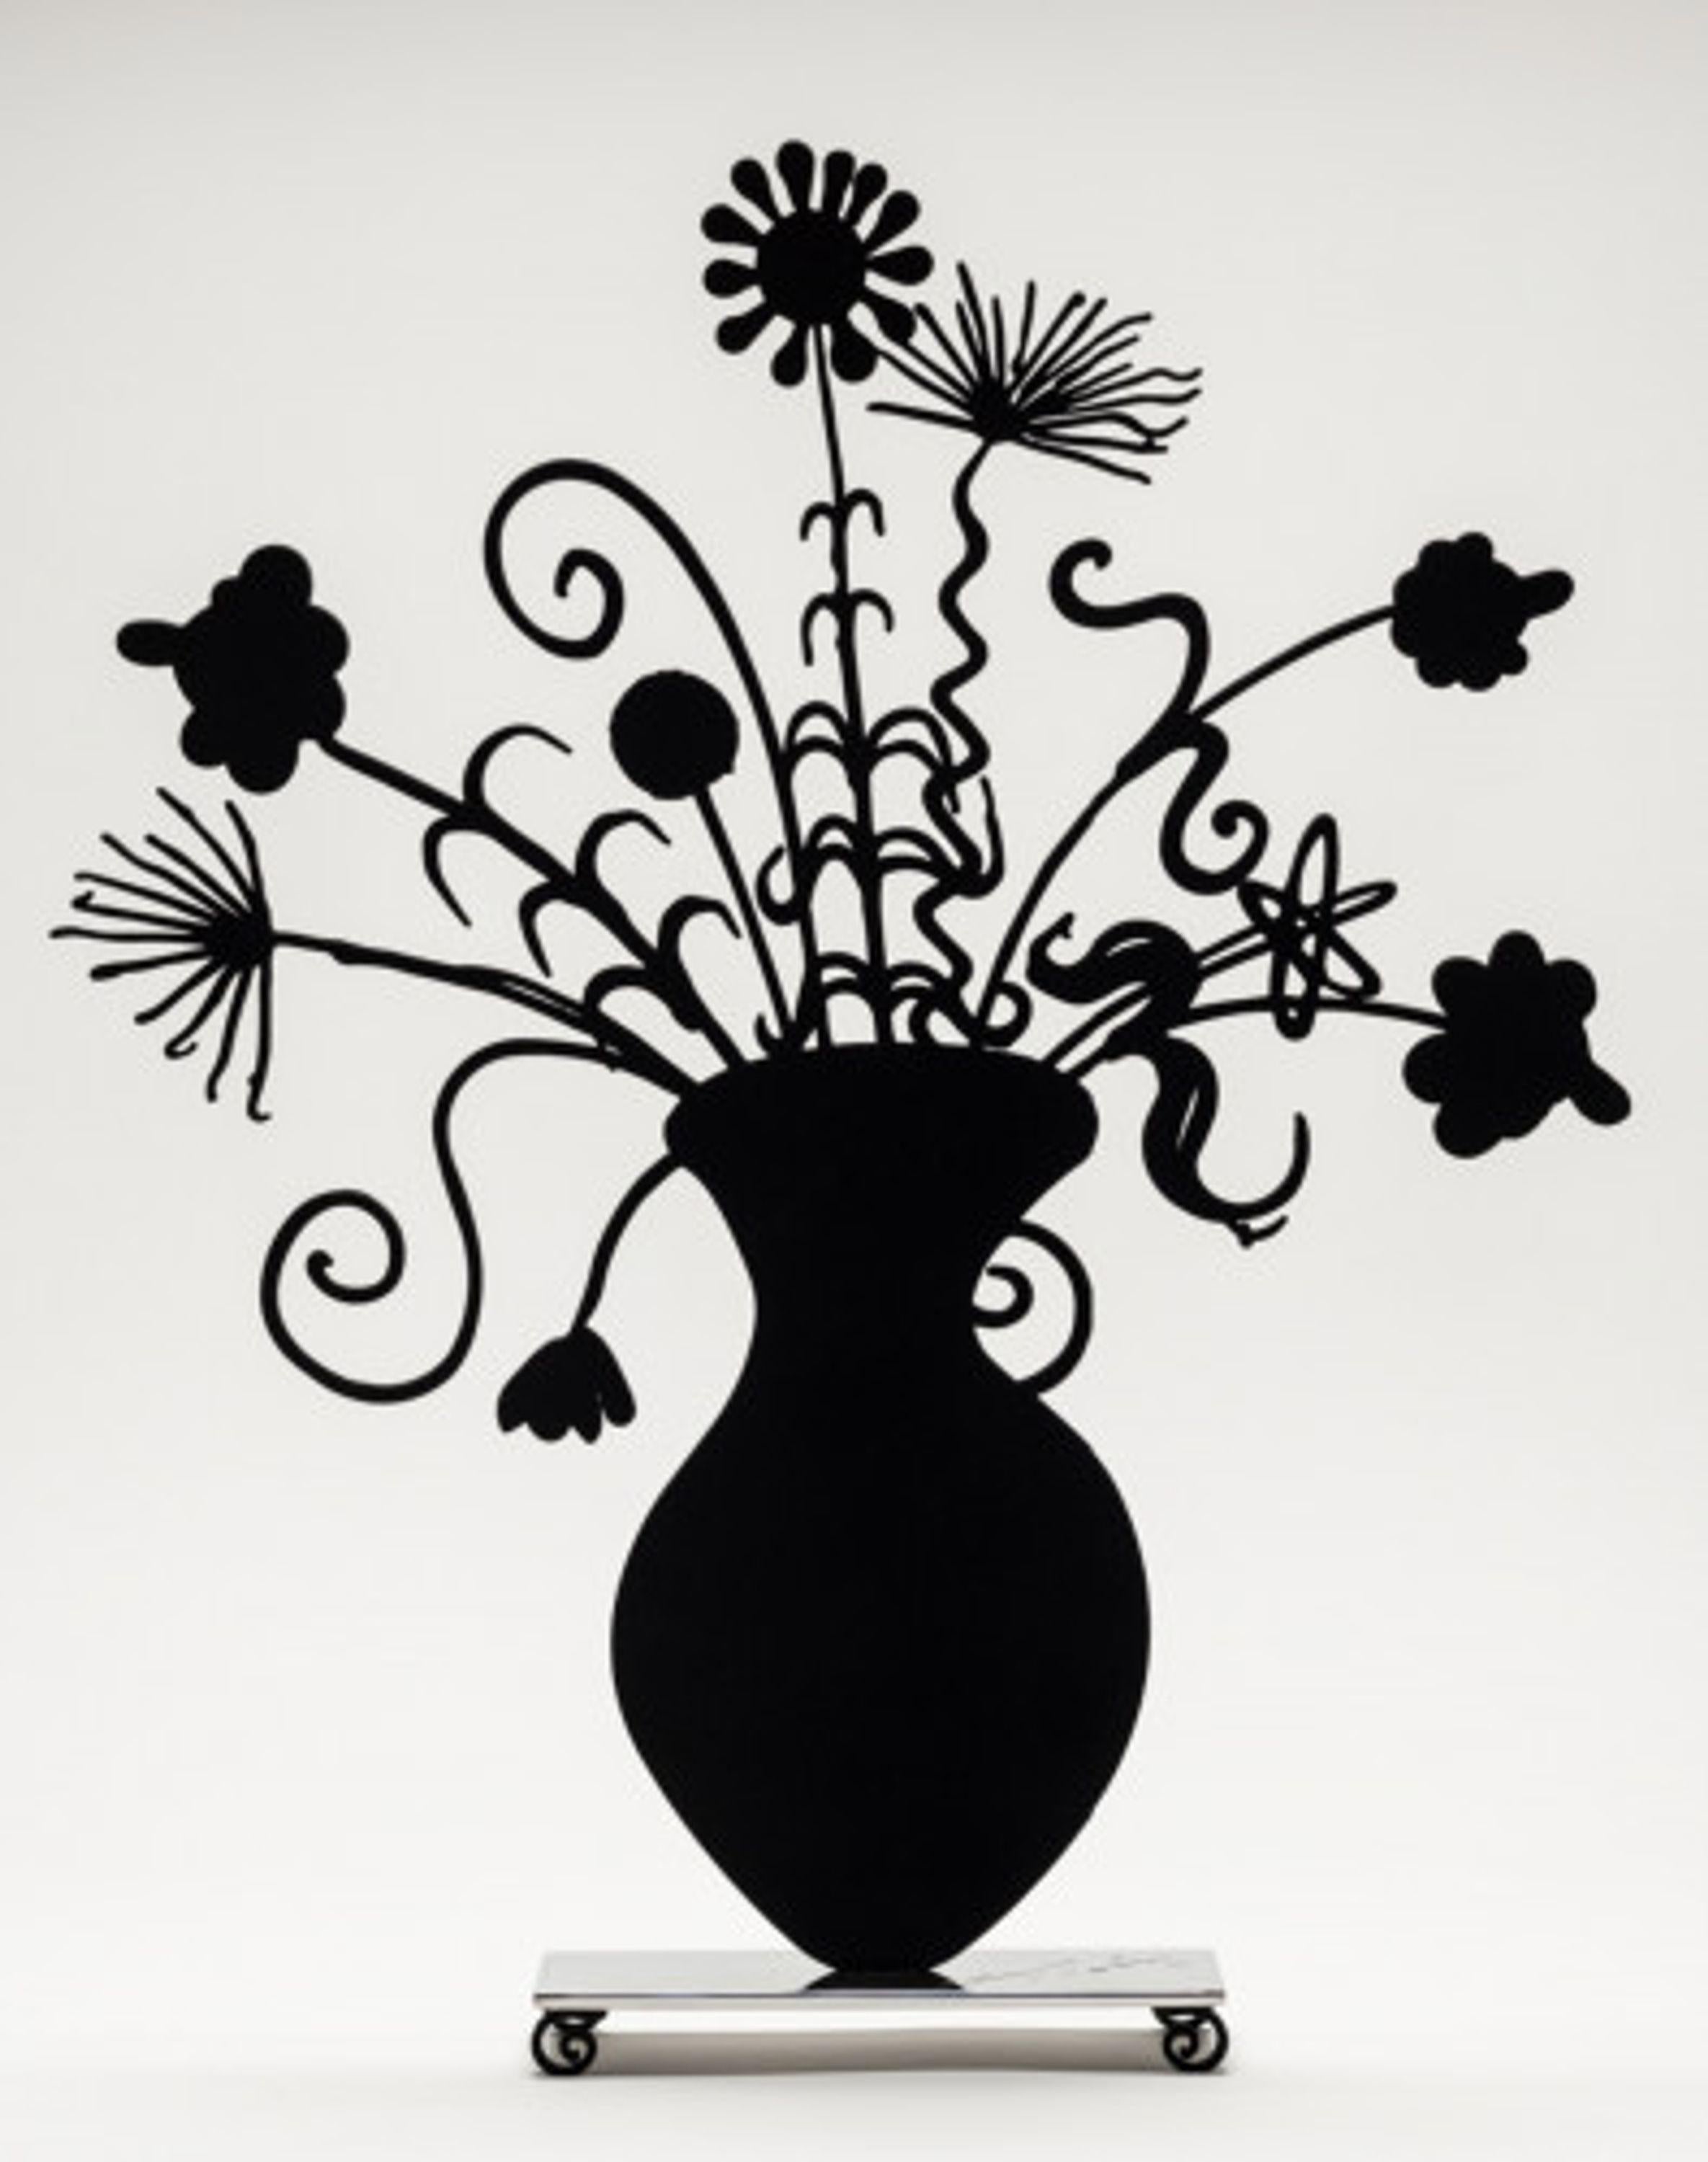 Flores Black - Sculpture by Kenny Scharf